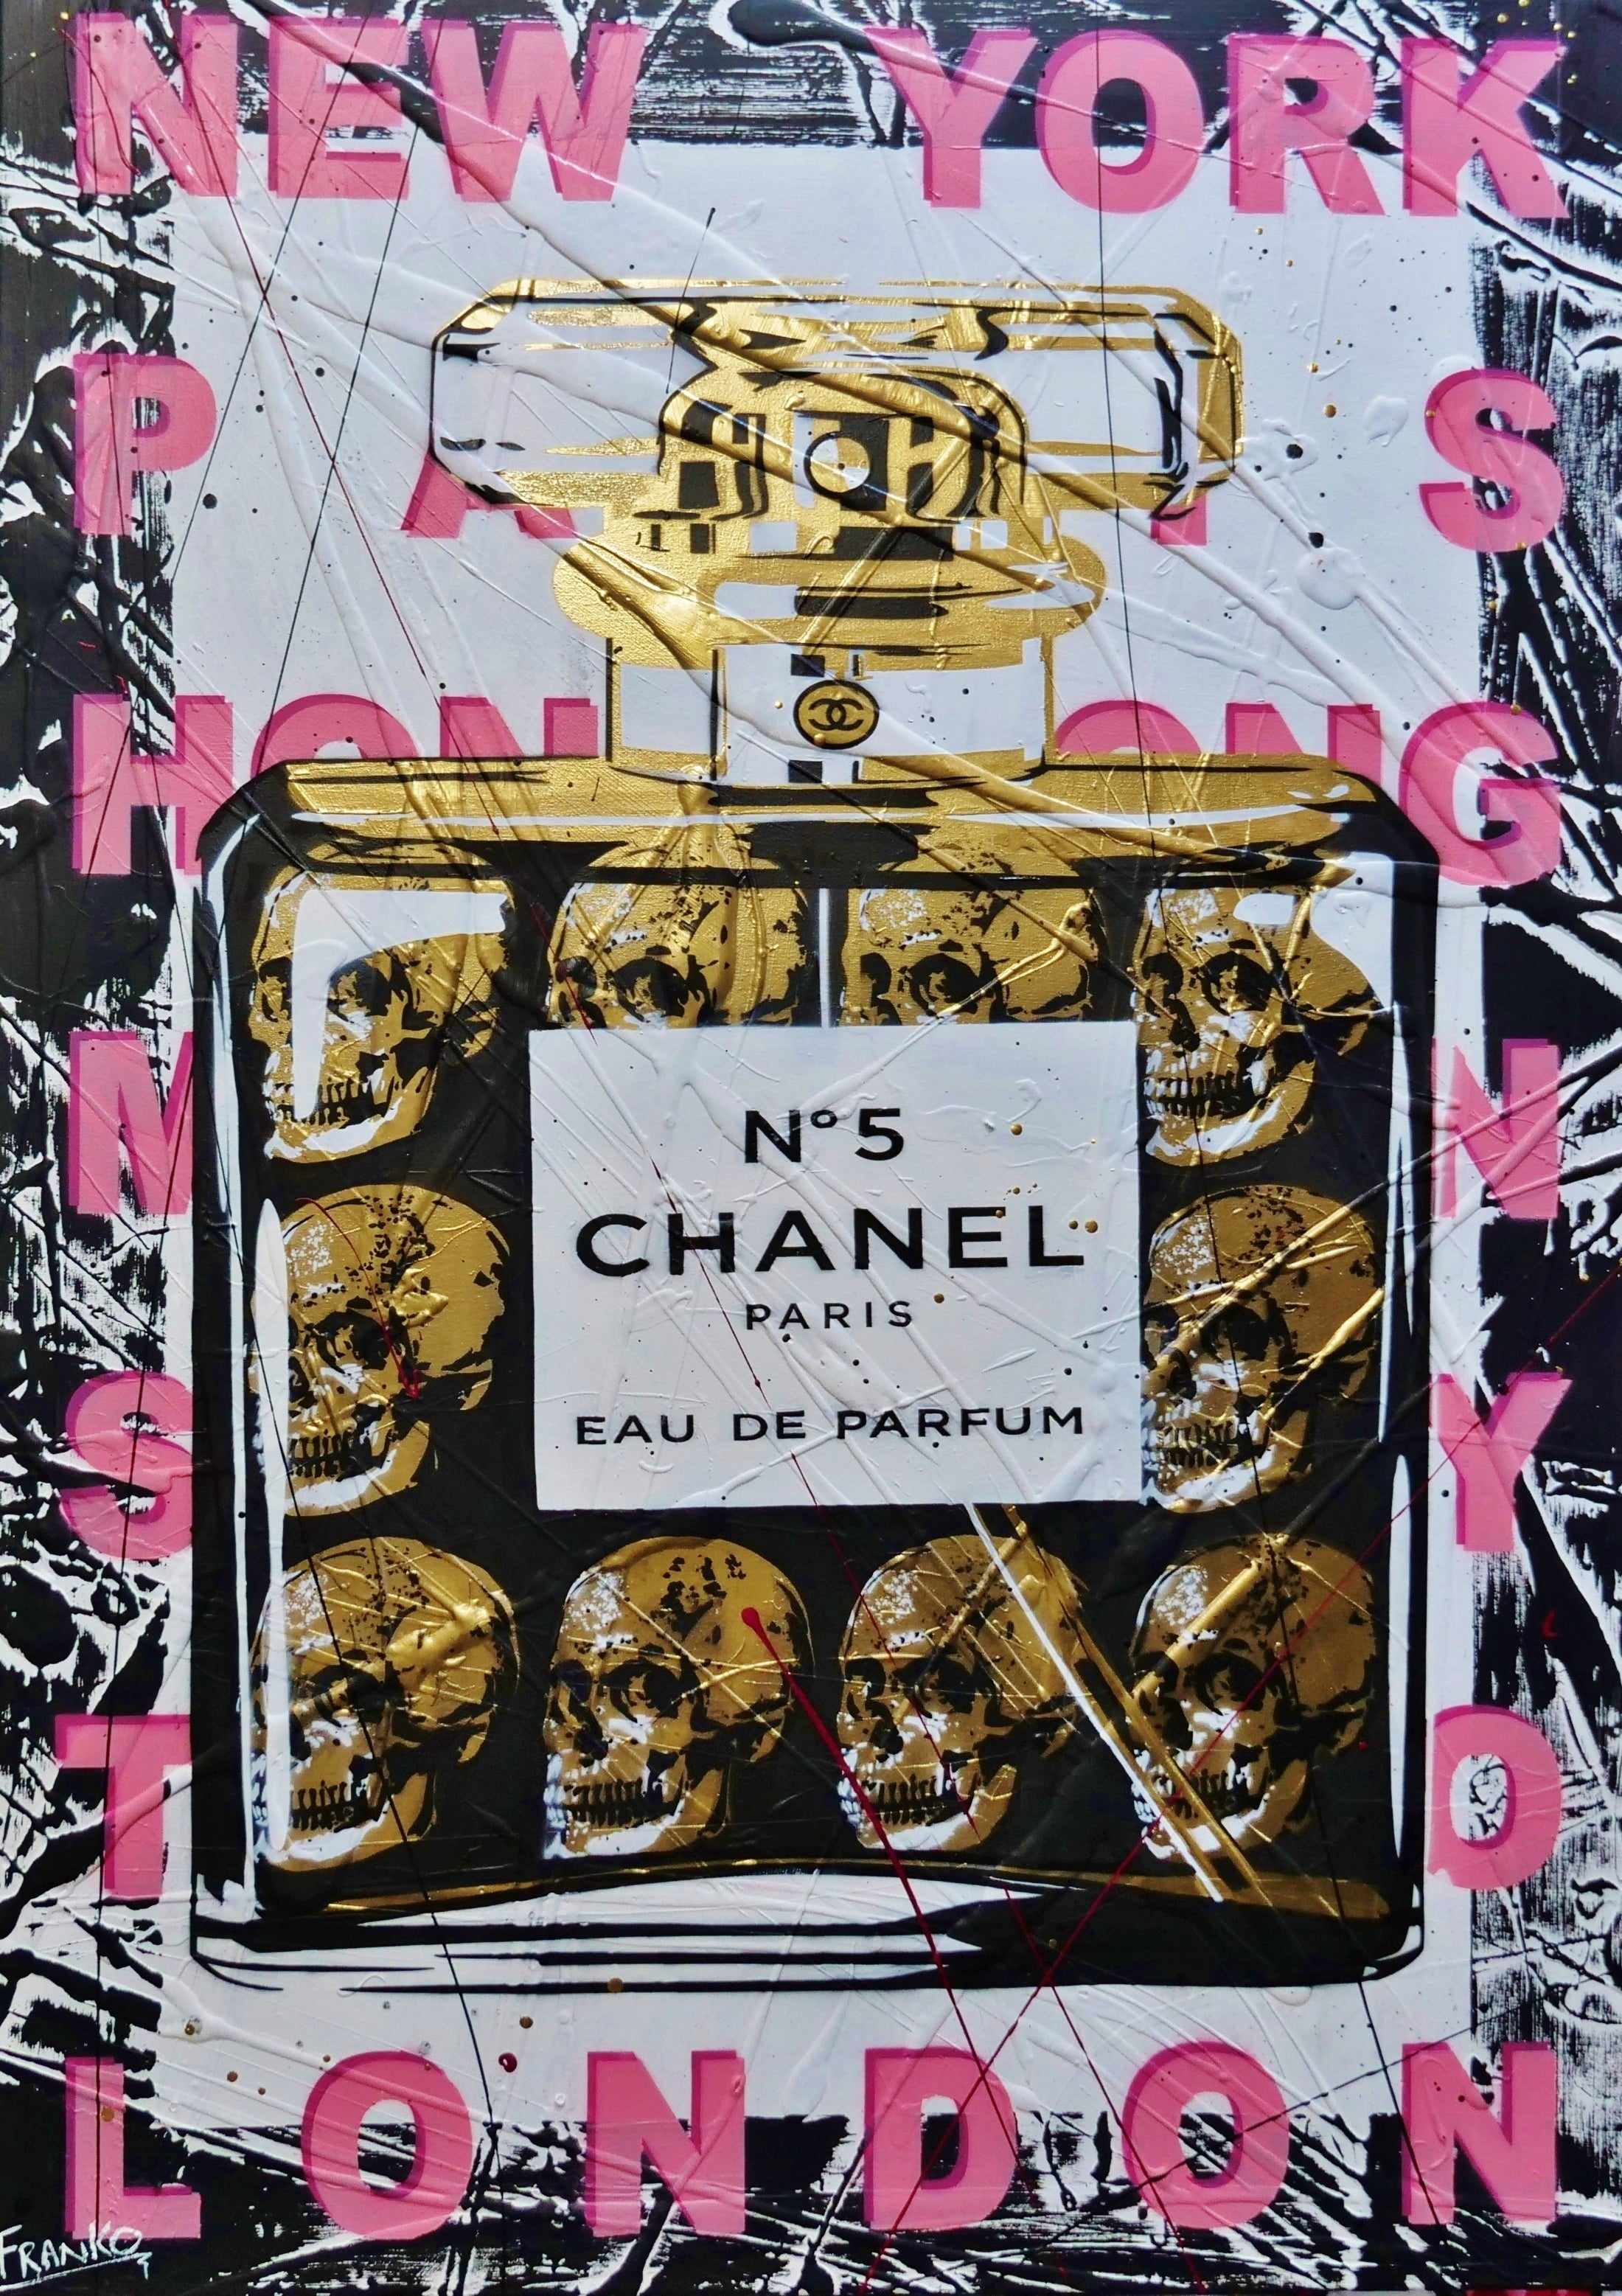 Chanel Le Chic 140cm x 100cm Chanel Bottle Textured Urban Pop Art Painting (SOLD)-Urban Pop Art-Franko-[Franko]-[Australia_Art]-[Art_Lovers_Australia]-Franklin Art Studio